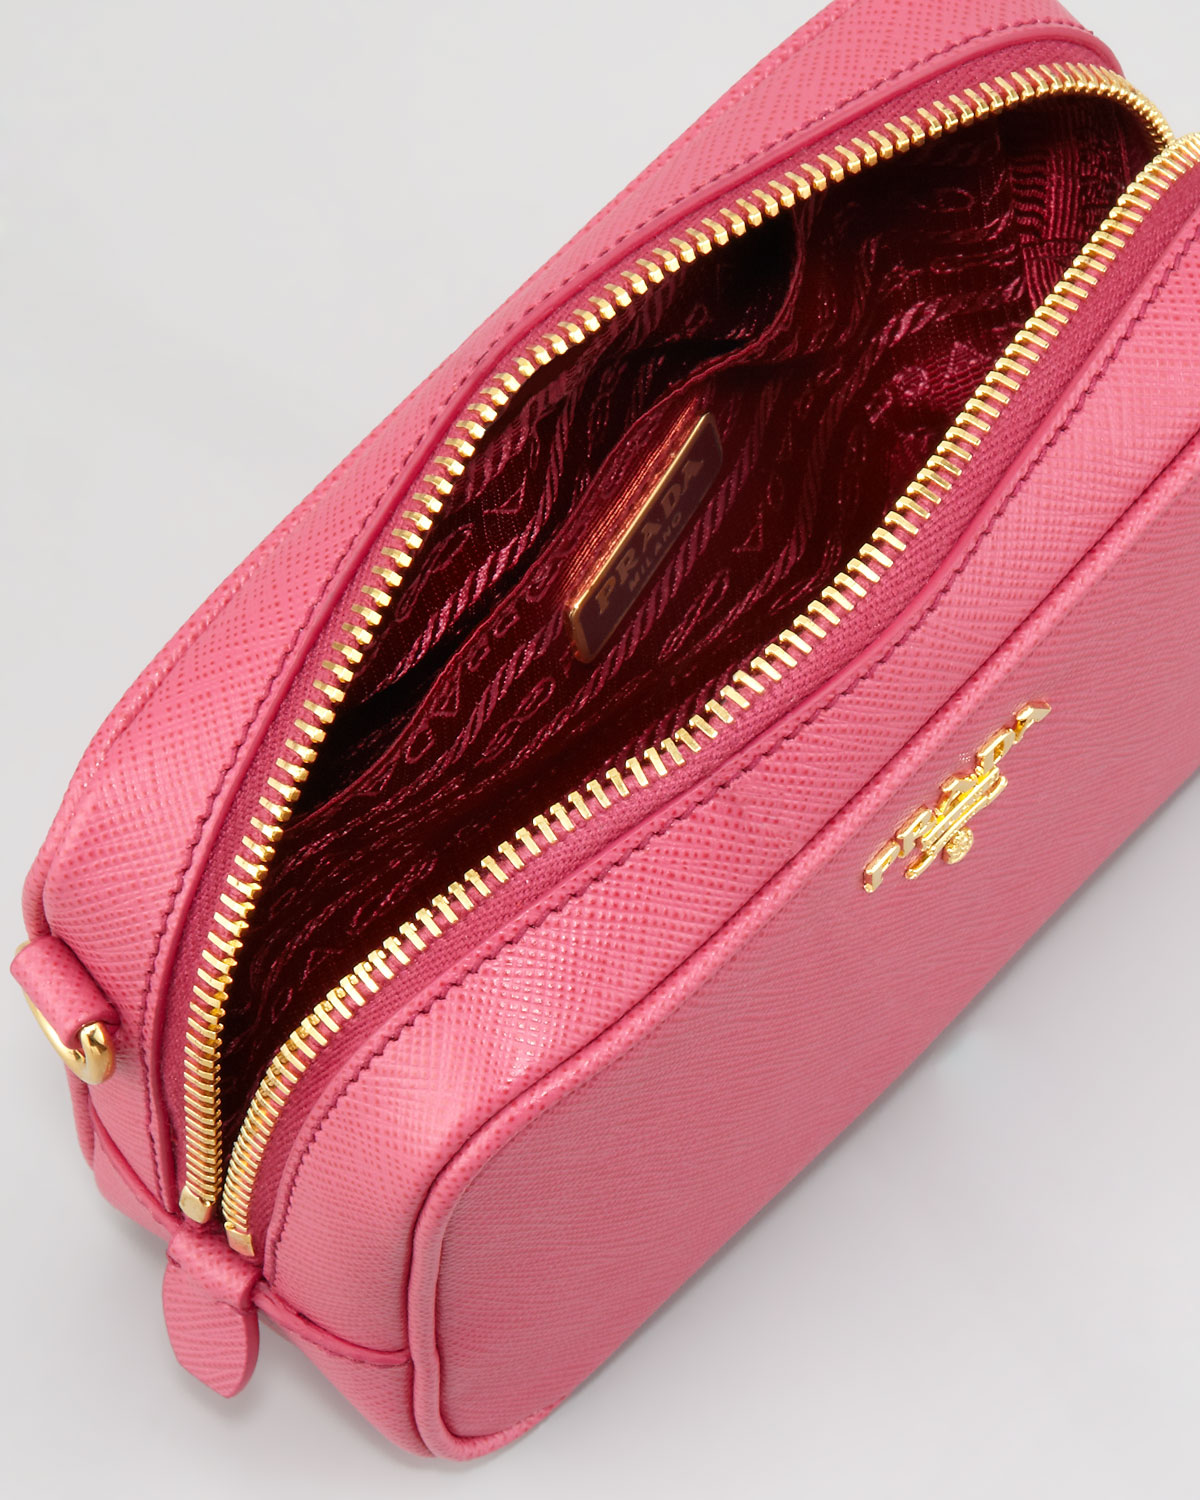 prada purse pictures - Prada Saffiano Mini Zip Crossbody Bag in Pink | Lyst